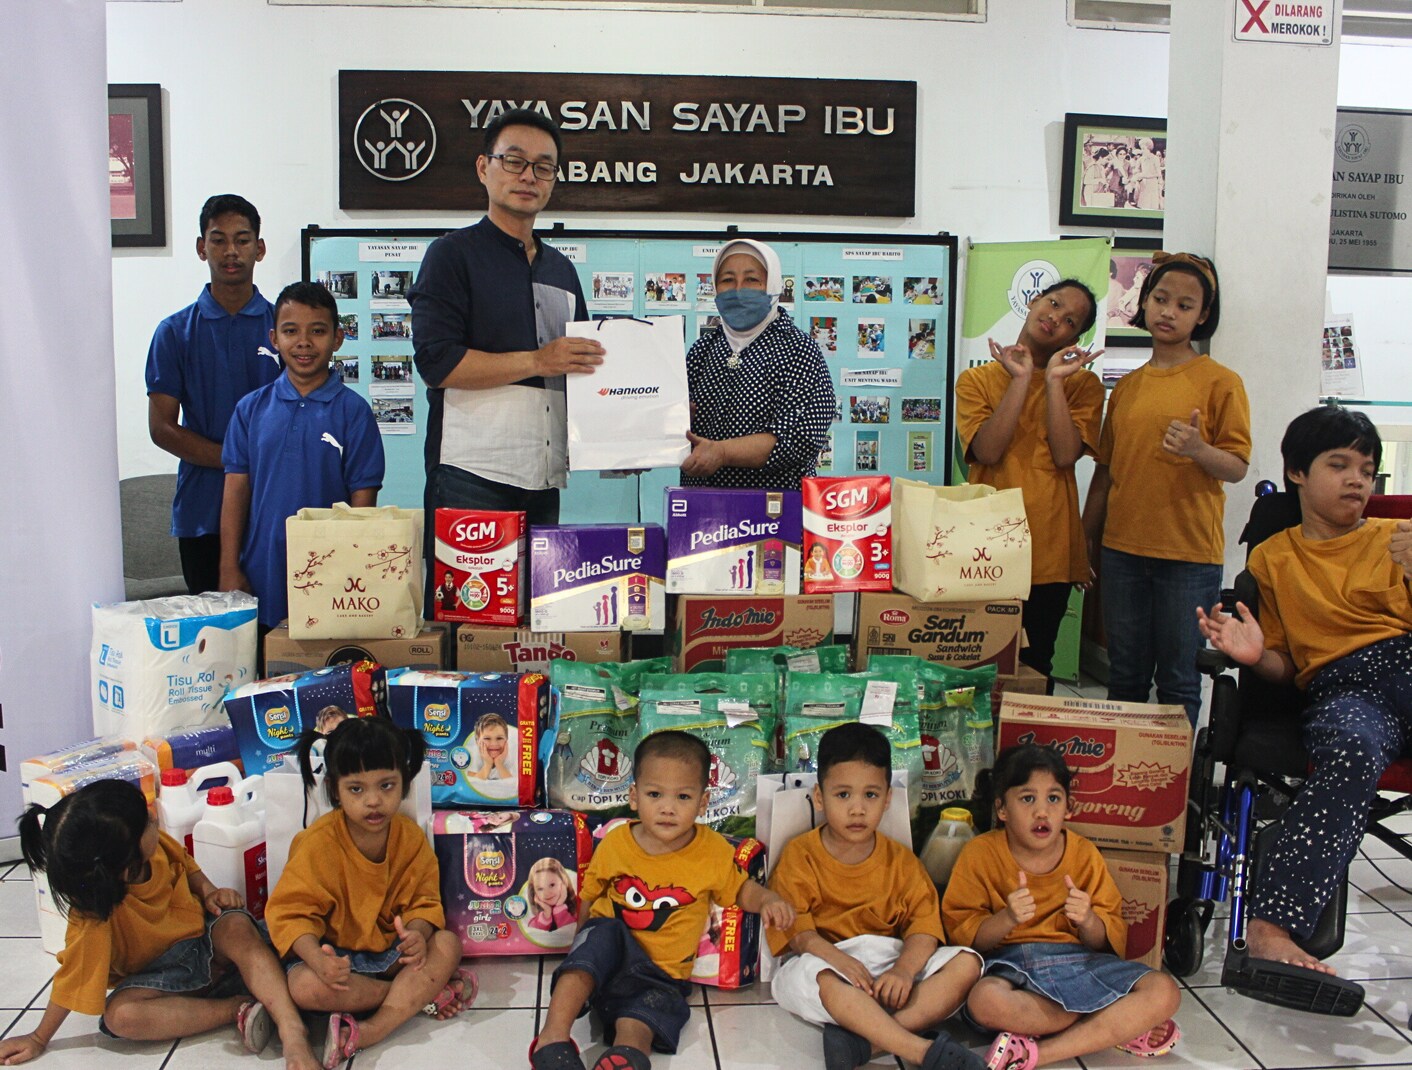 Hankook Tire Indonesia Kembali Memberikan Dukungan Untuk Kesejahteraan Anak di Yayasan Sayap Ibu